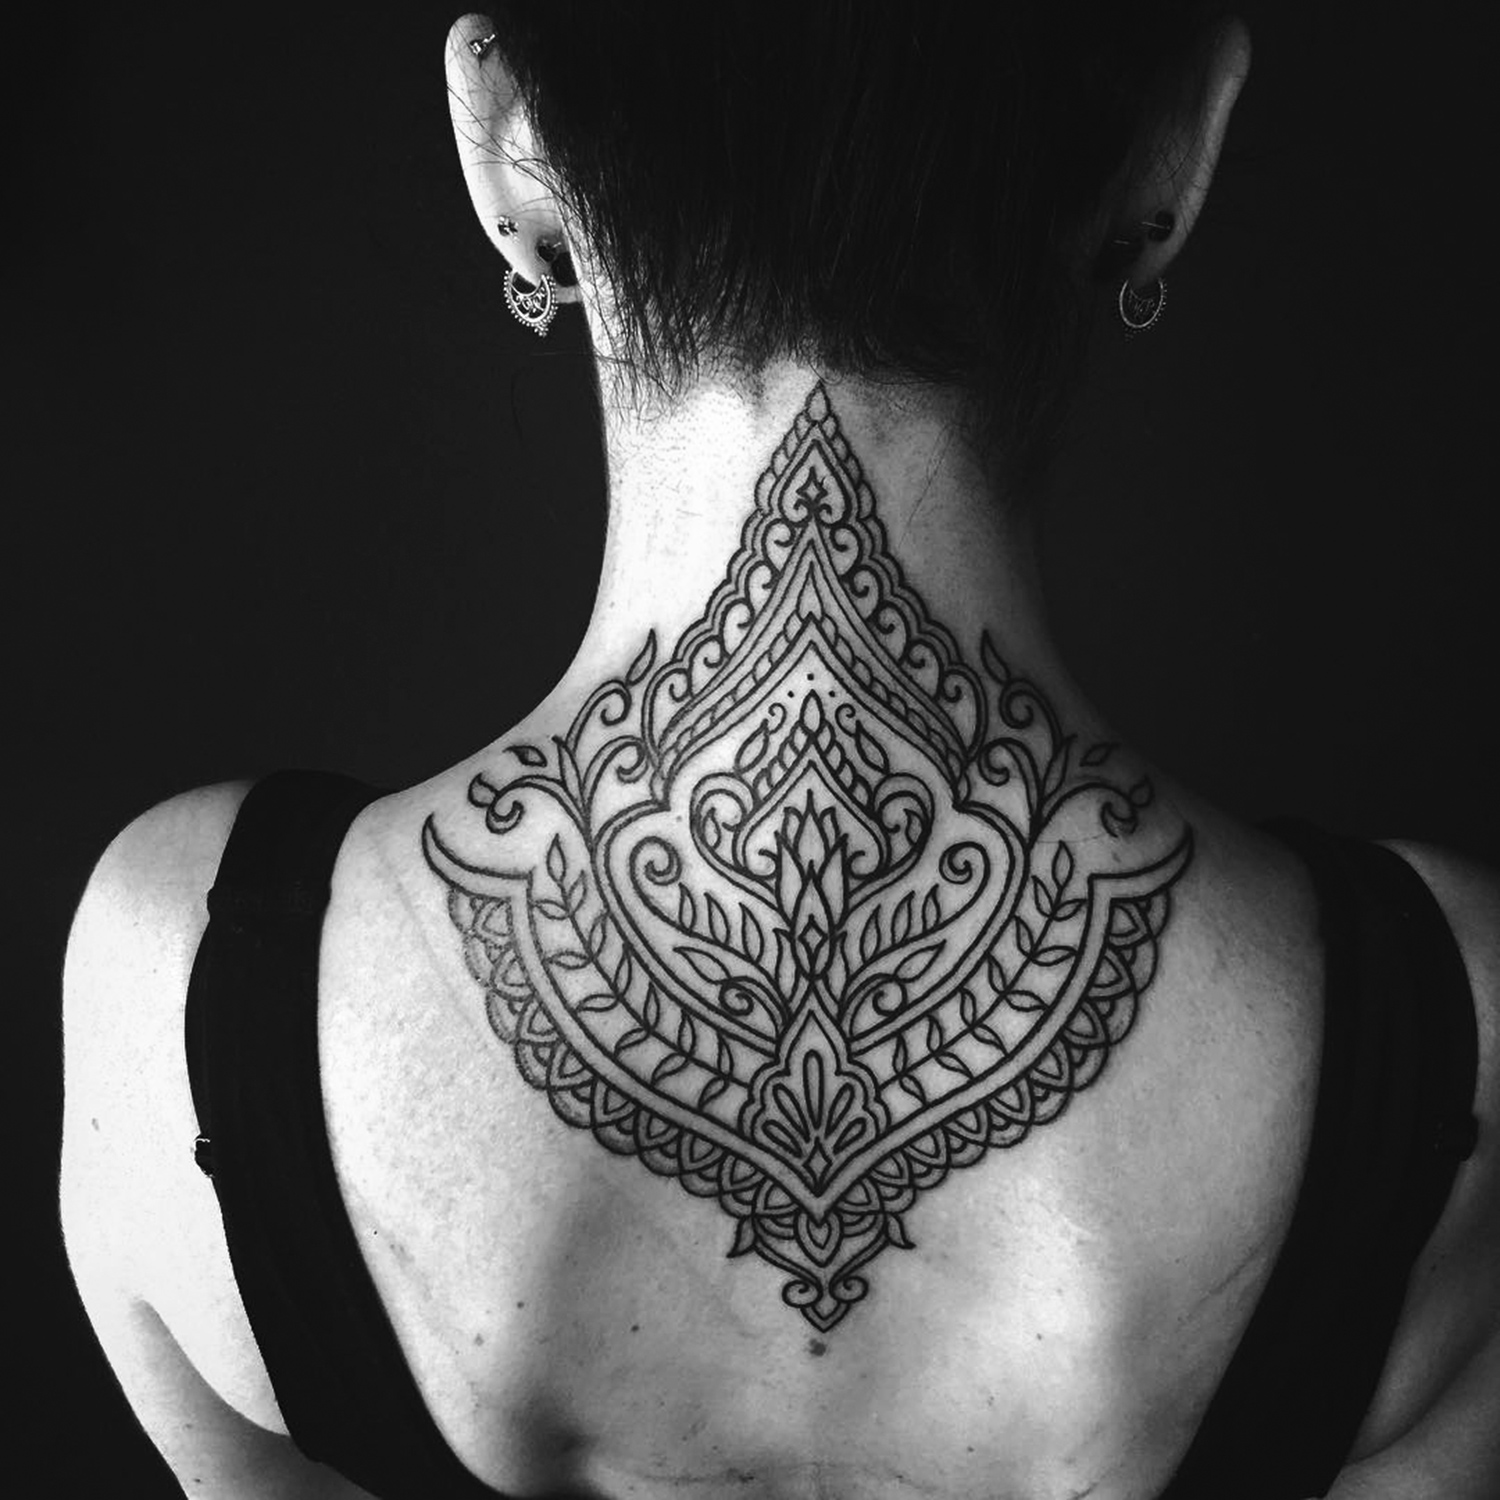 Ellemental Tattoos - upper back and neck ornamental tattoo